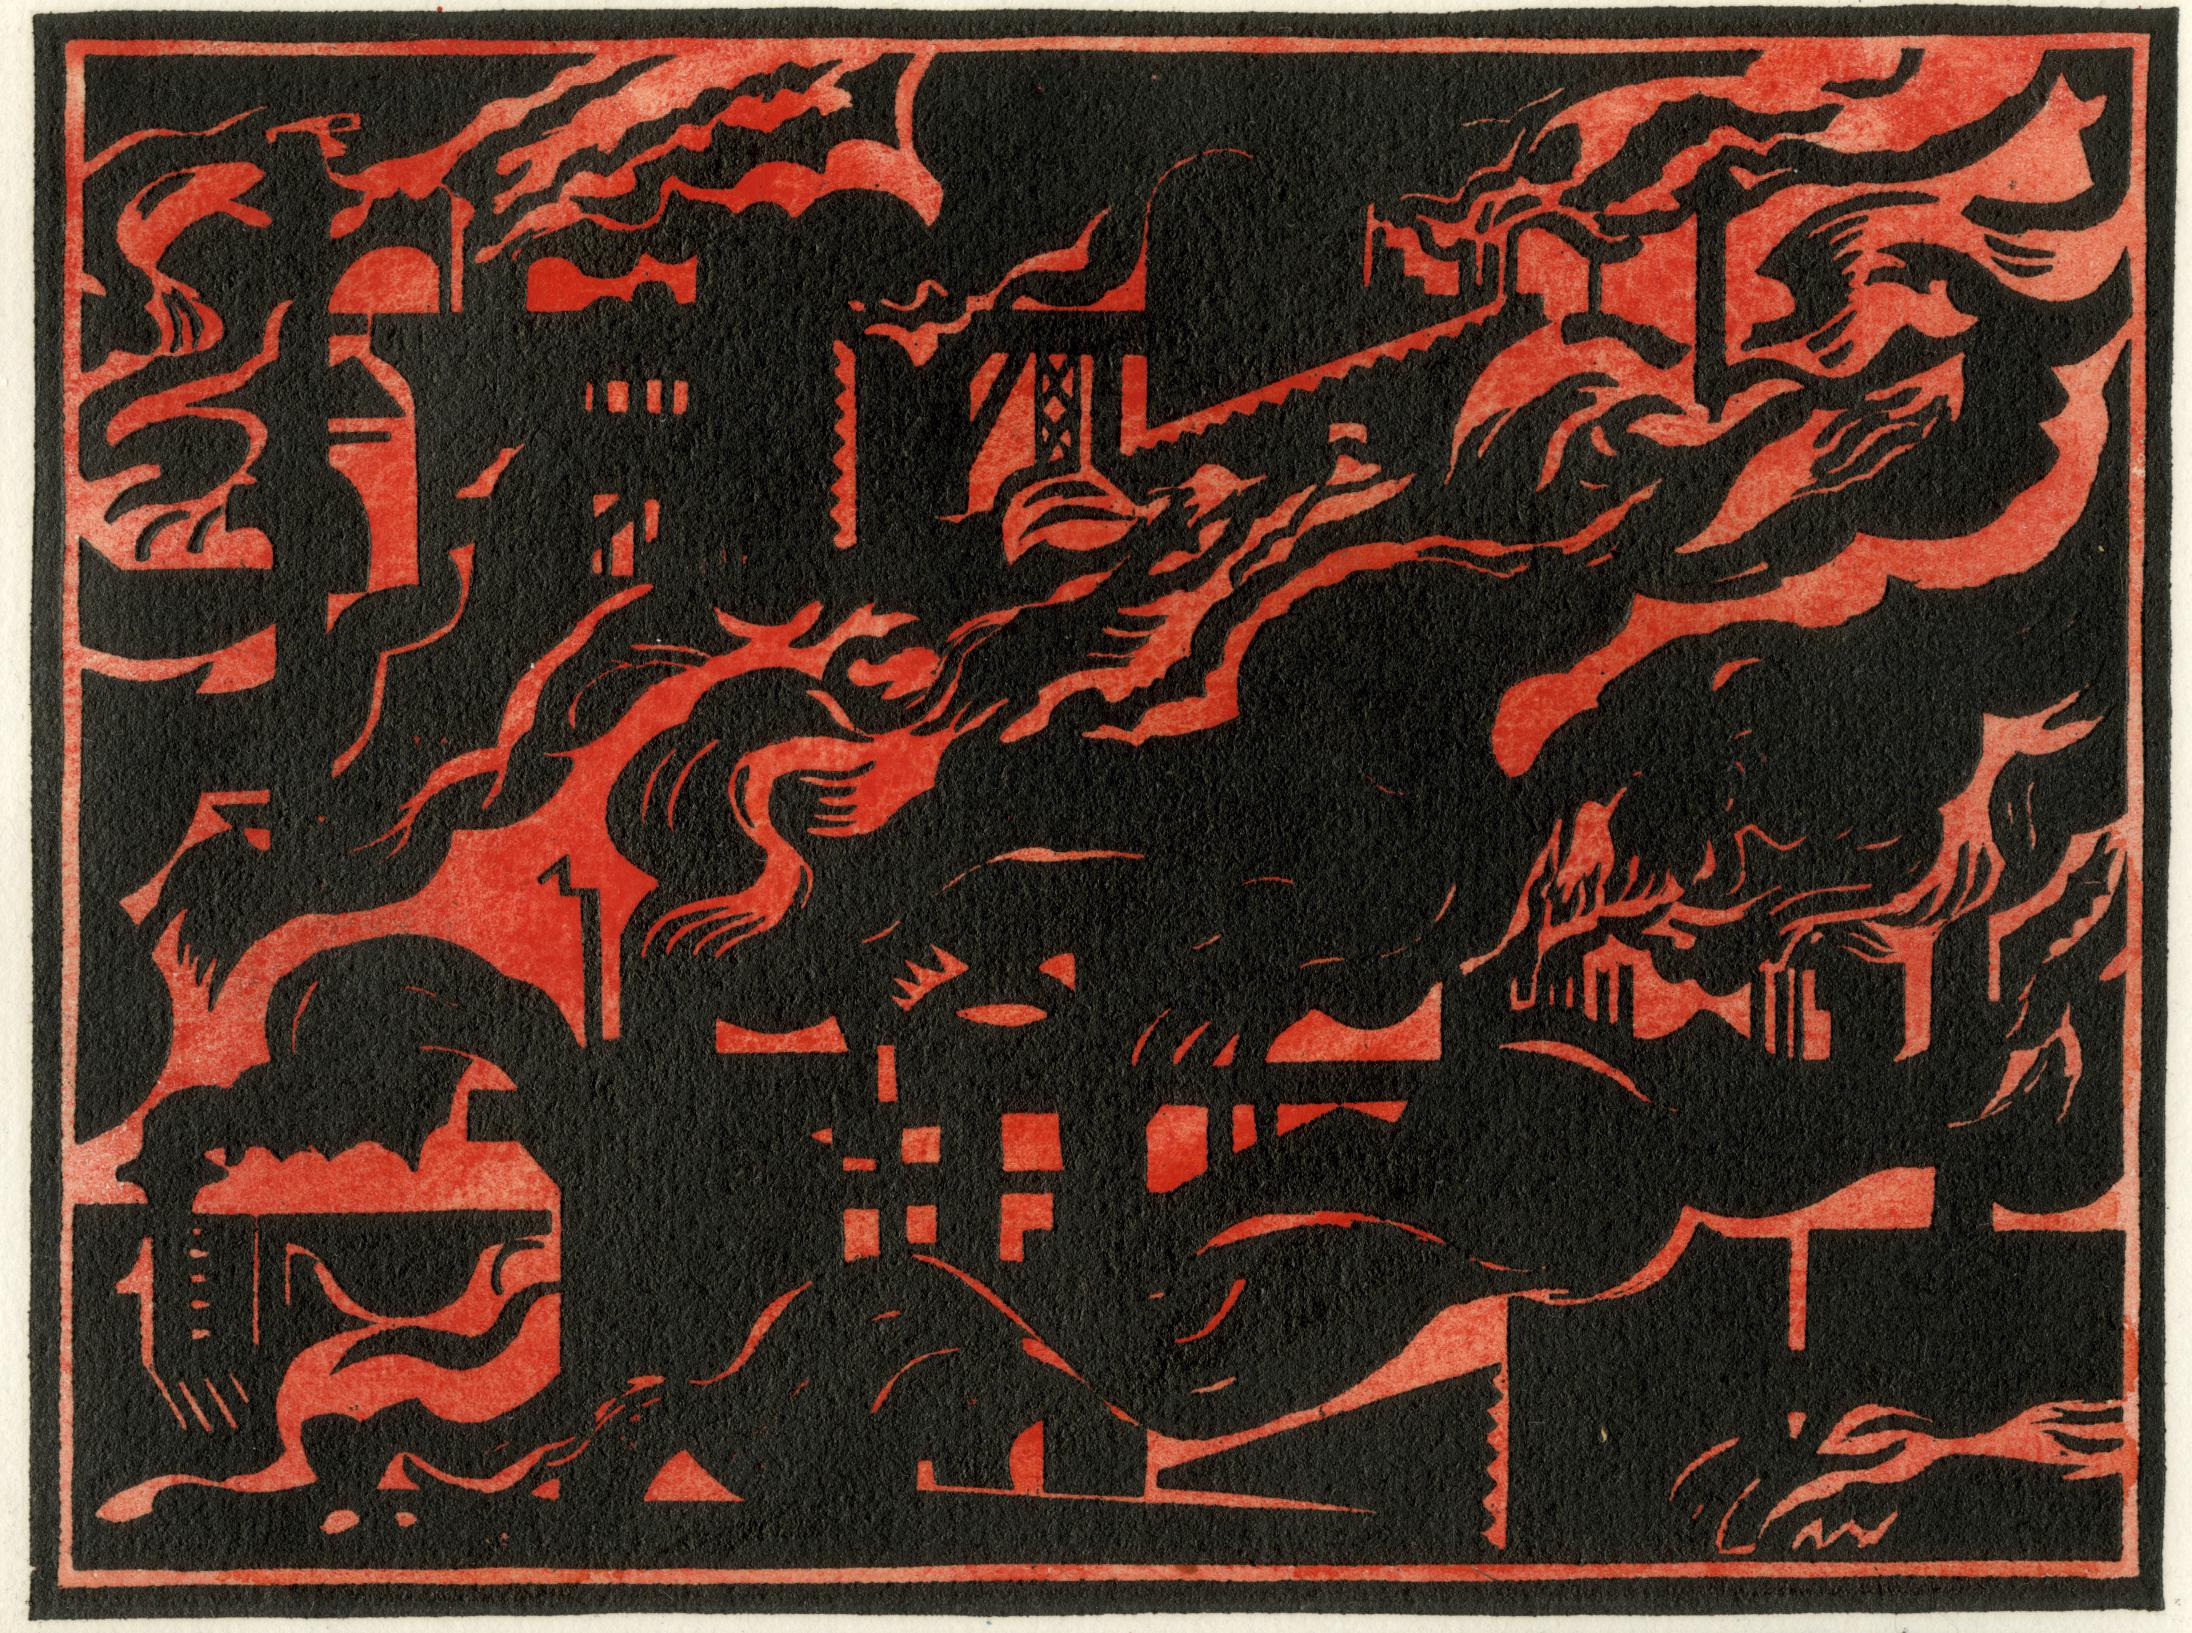 Blast Furnaces (1919)